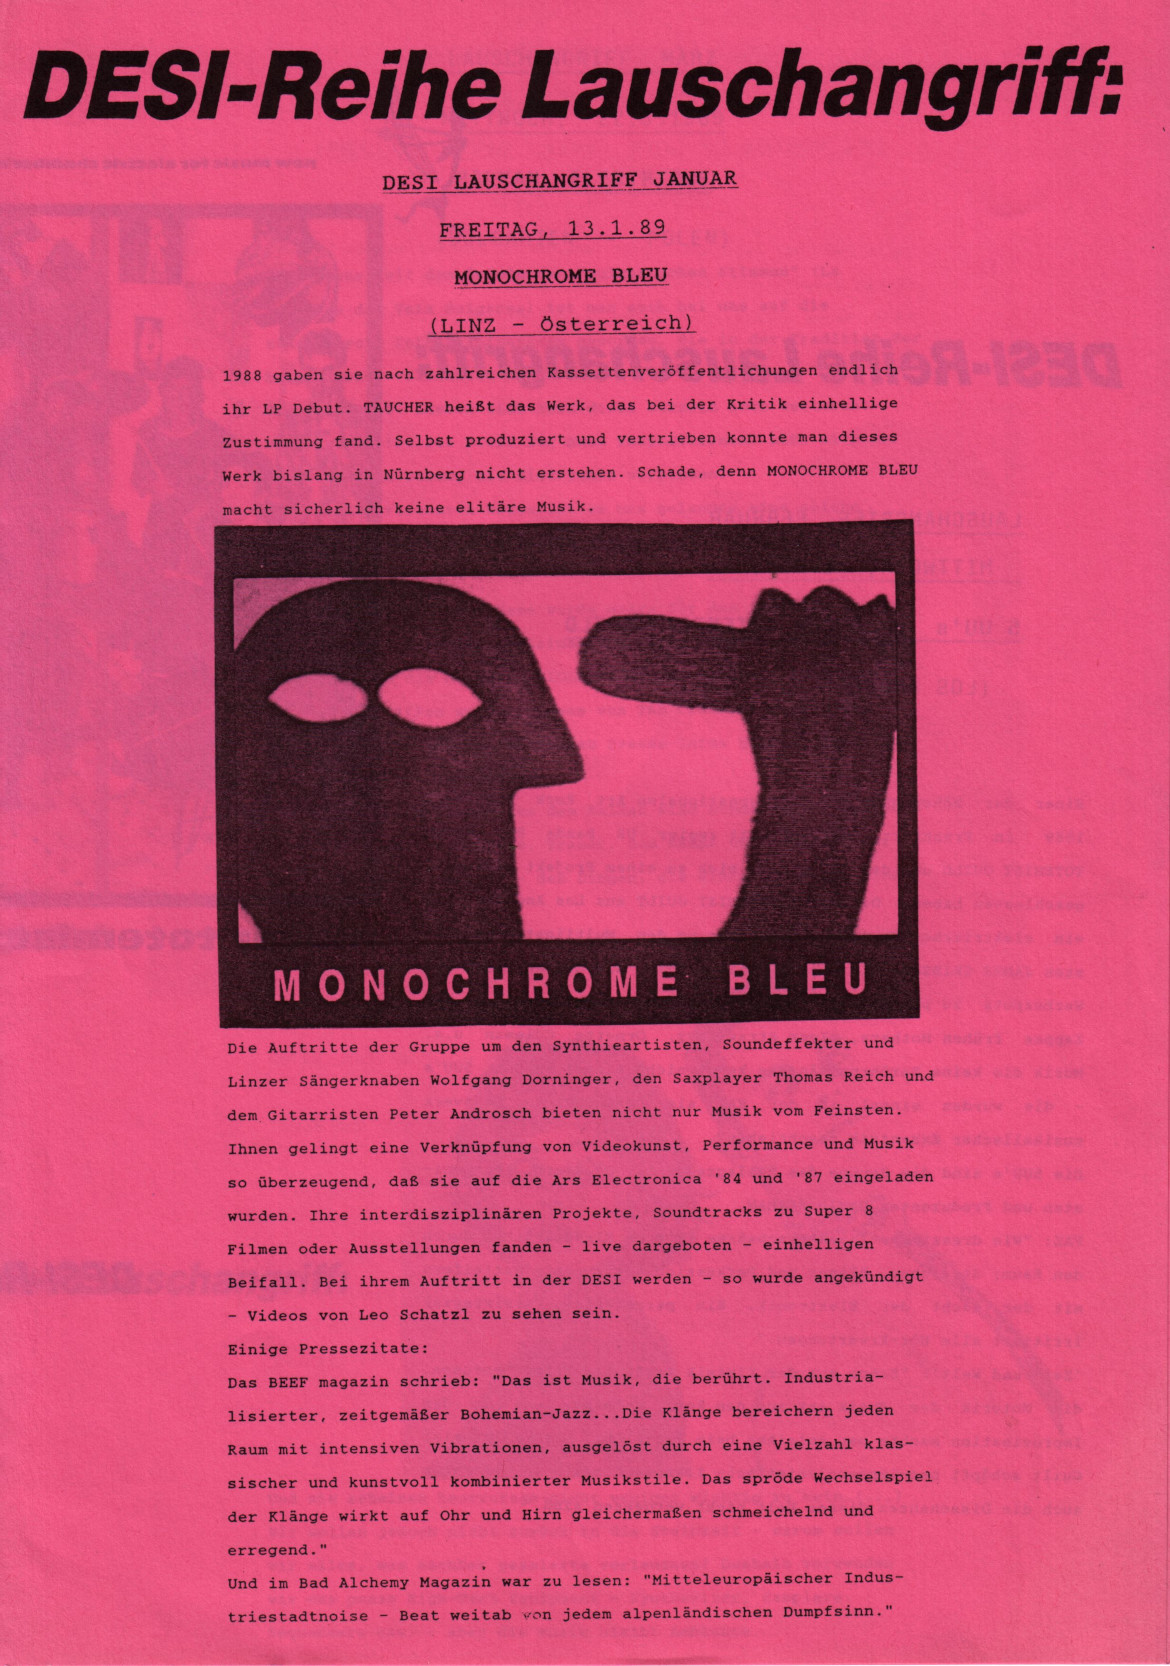 Booklet: Monochrome Bleu live at DESI-Reihe Lauschangriff